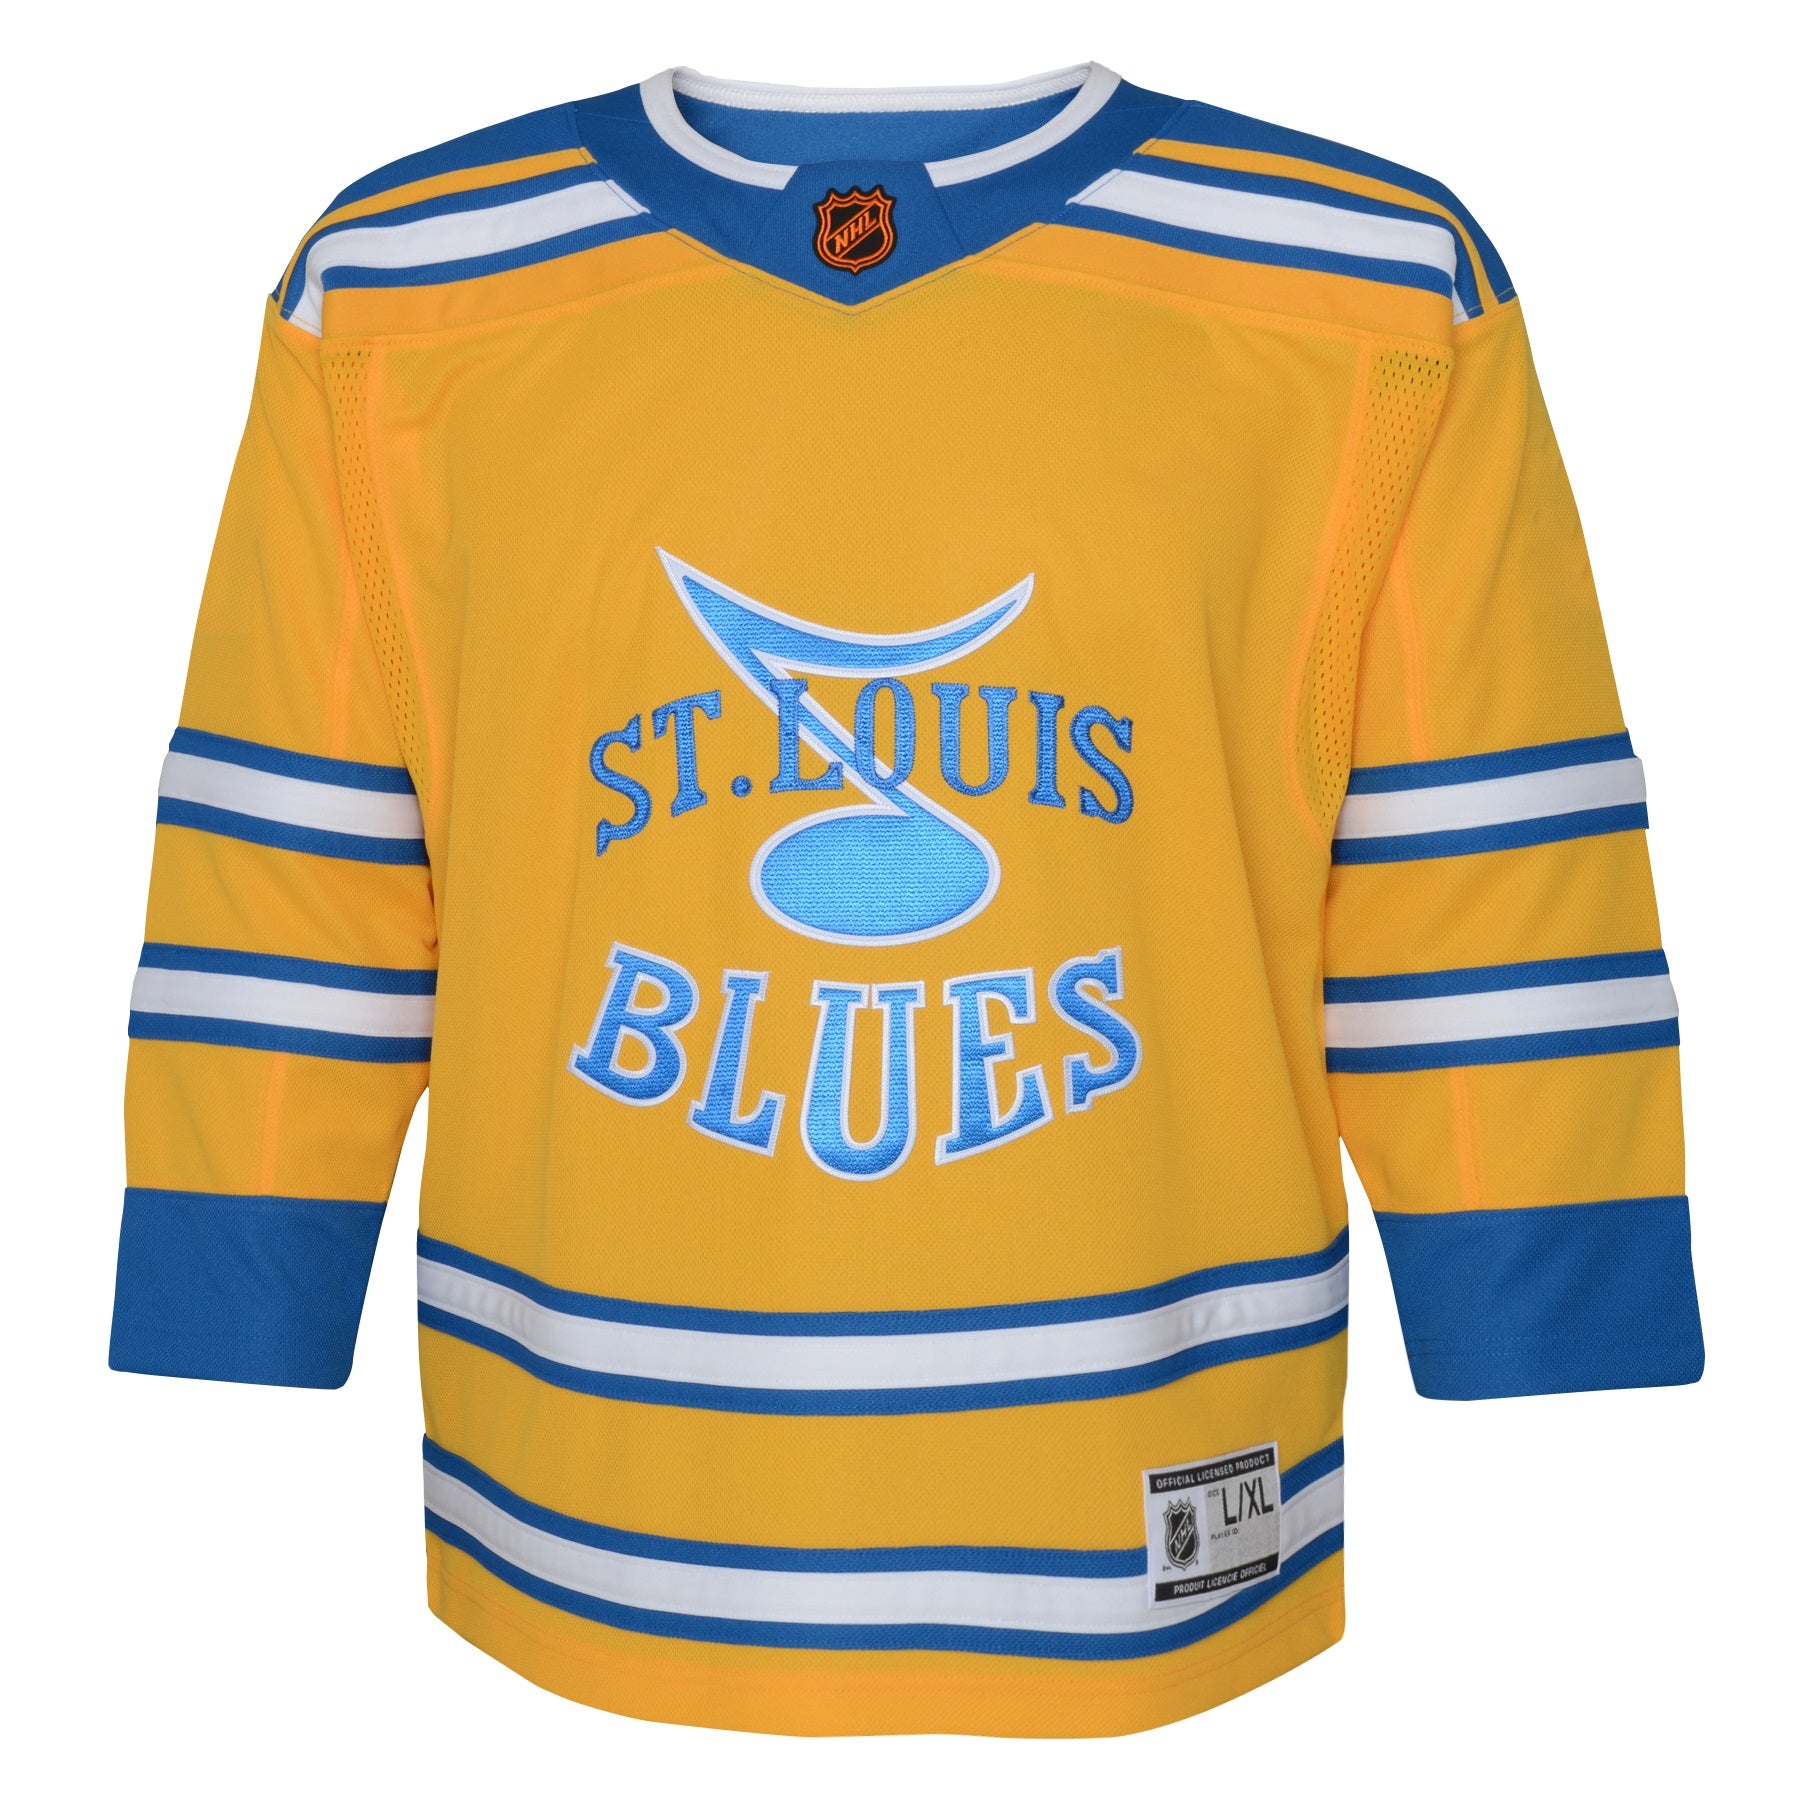 Flyers to wear Reverse Retro jerseys, Cooperalls vs. St. Louis Blues